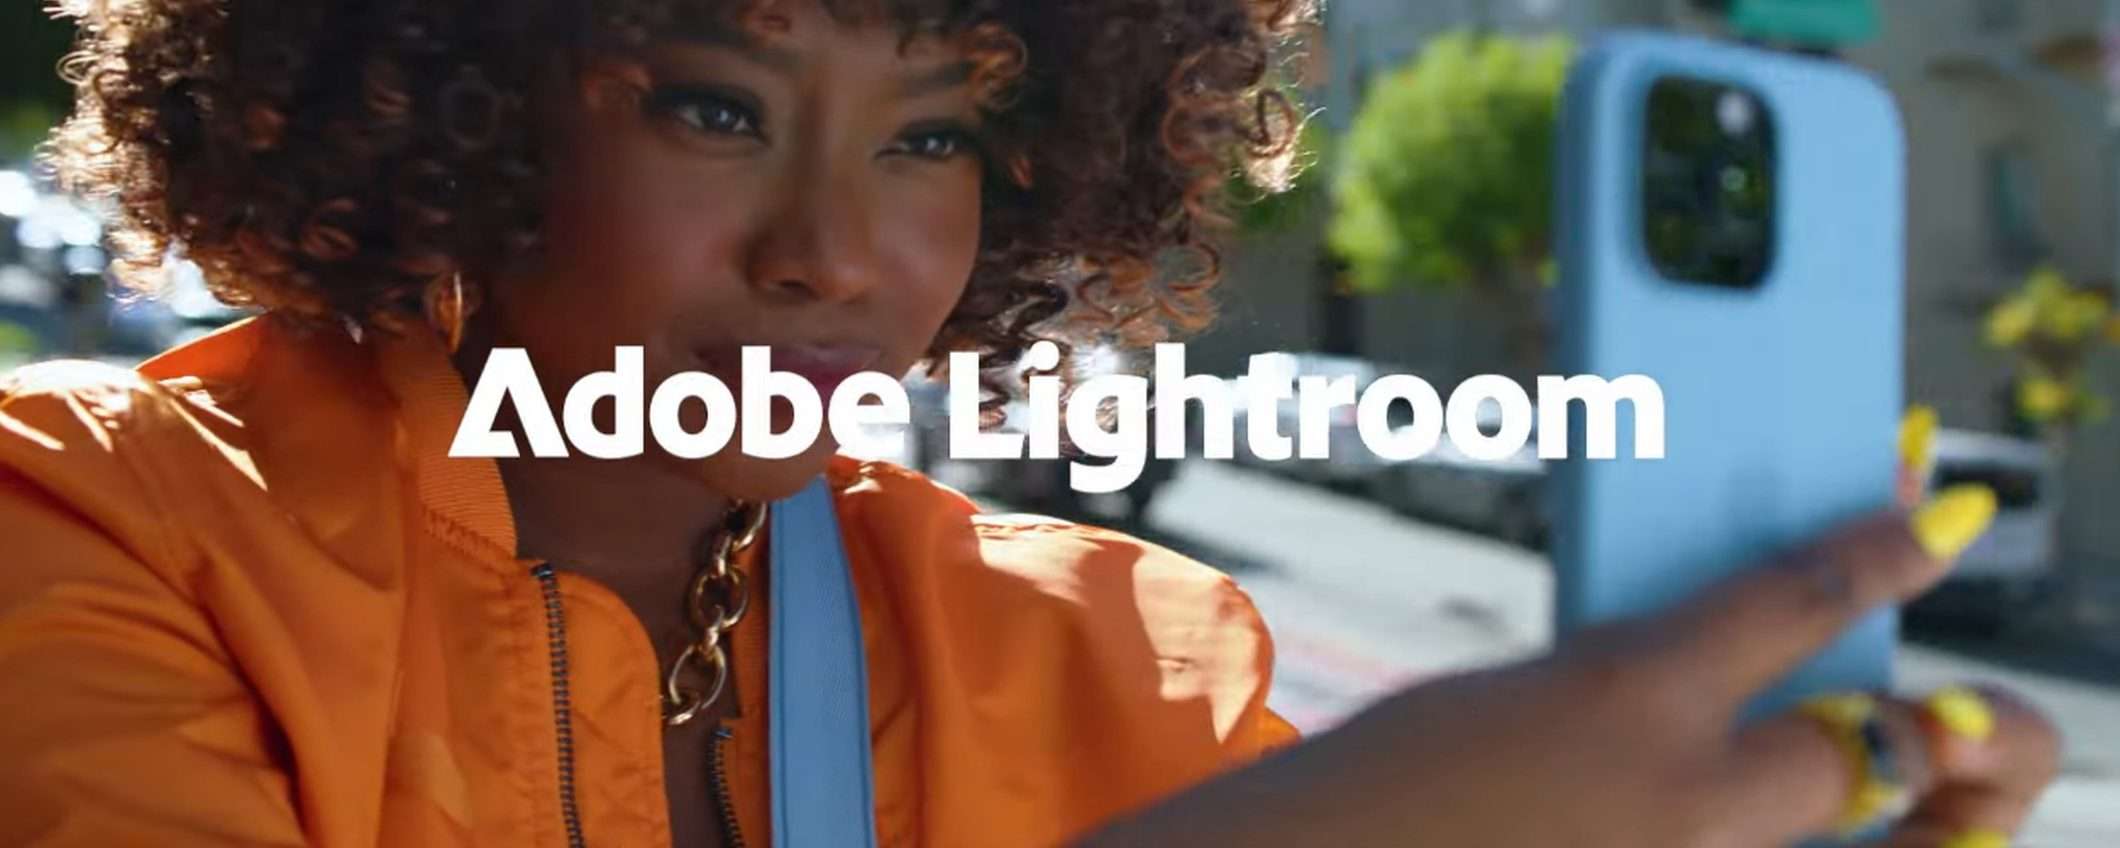 Adobe Lightroom: Generative Remove e Lens Blur